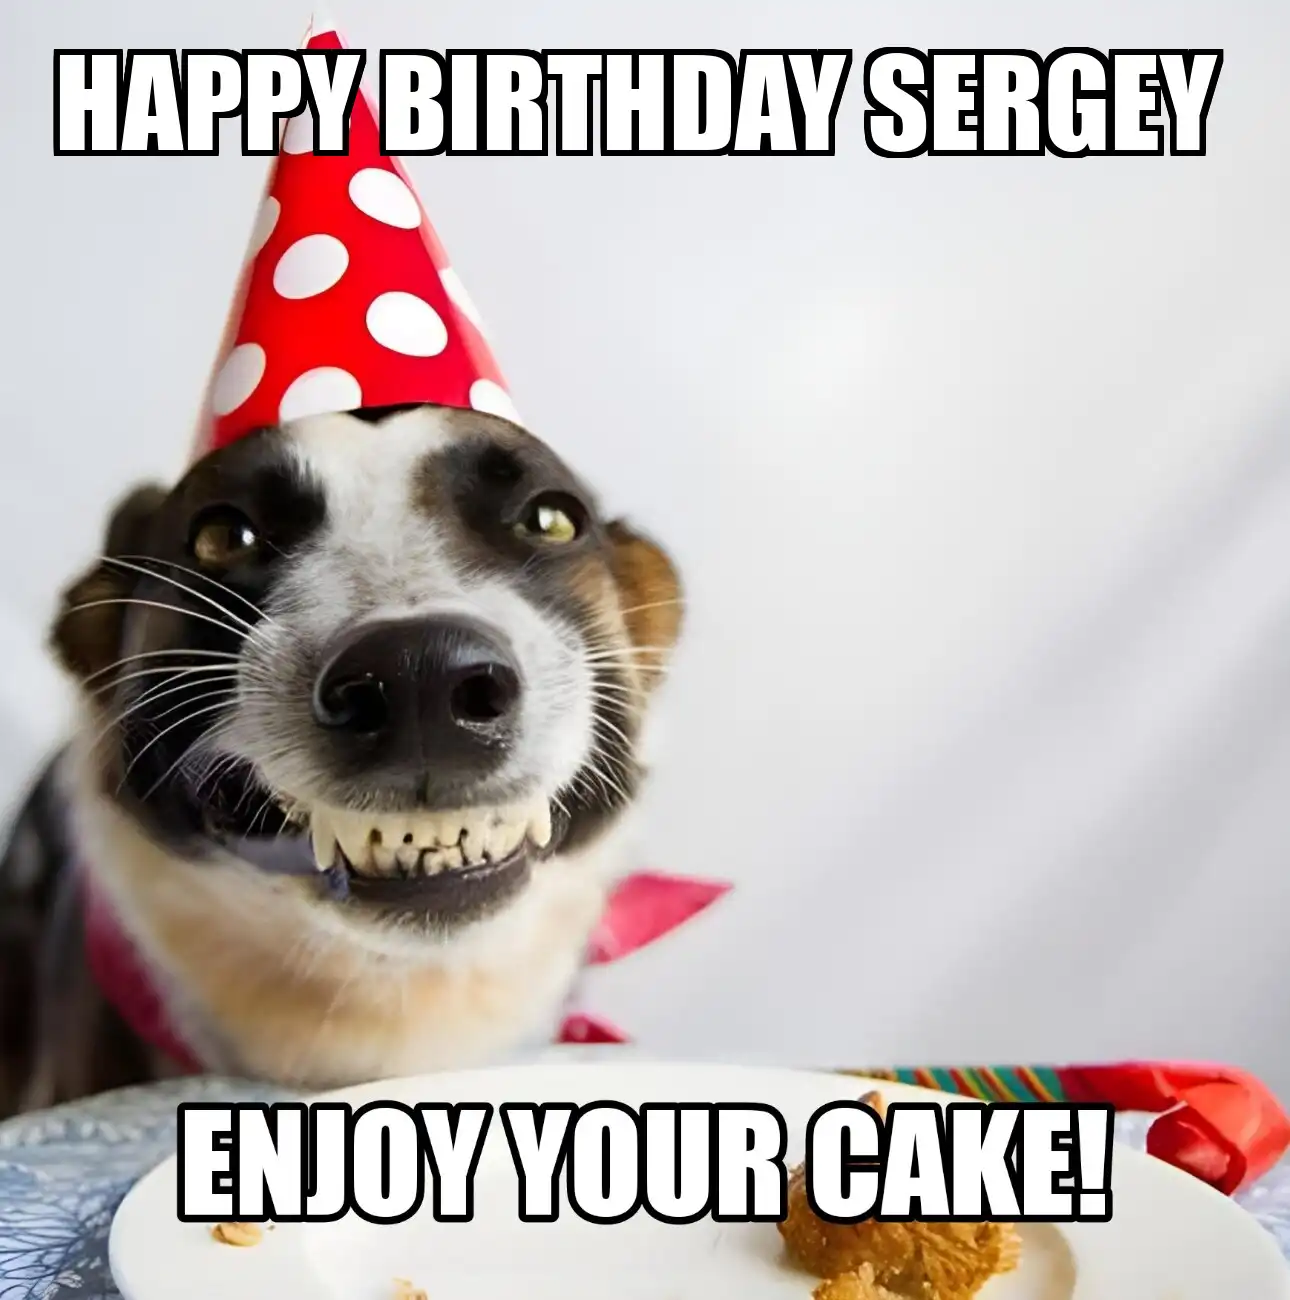 Happy Birthday Sergey Enjoy Your Cake Dog Meme